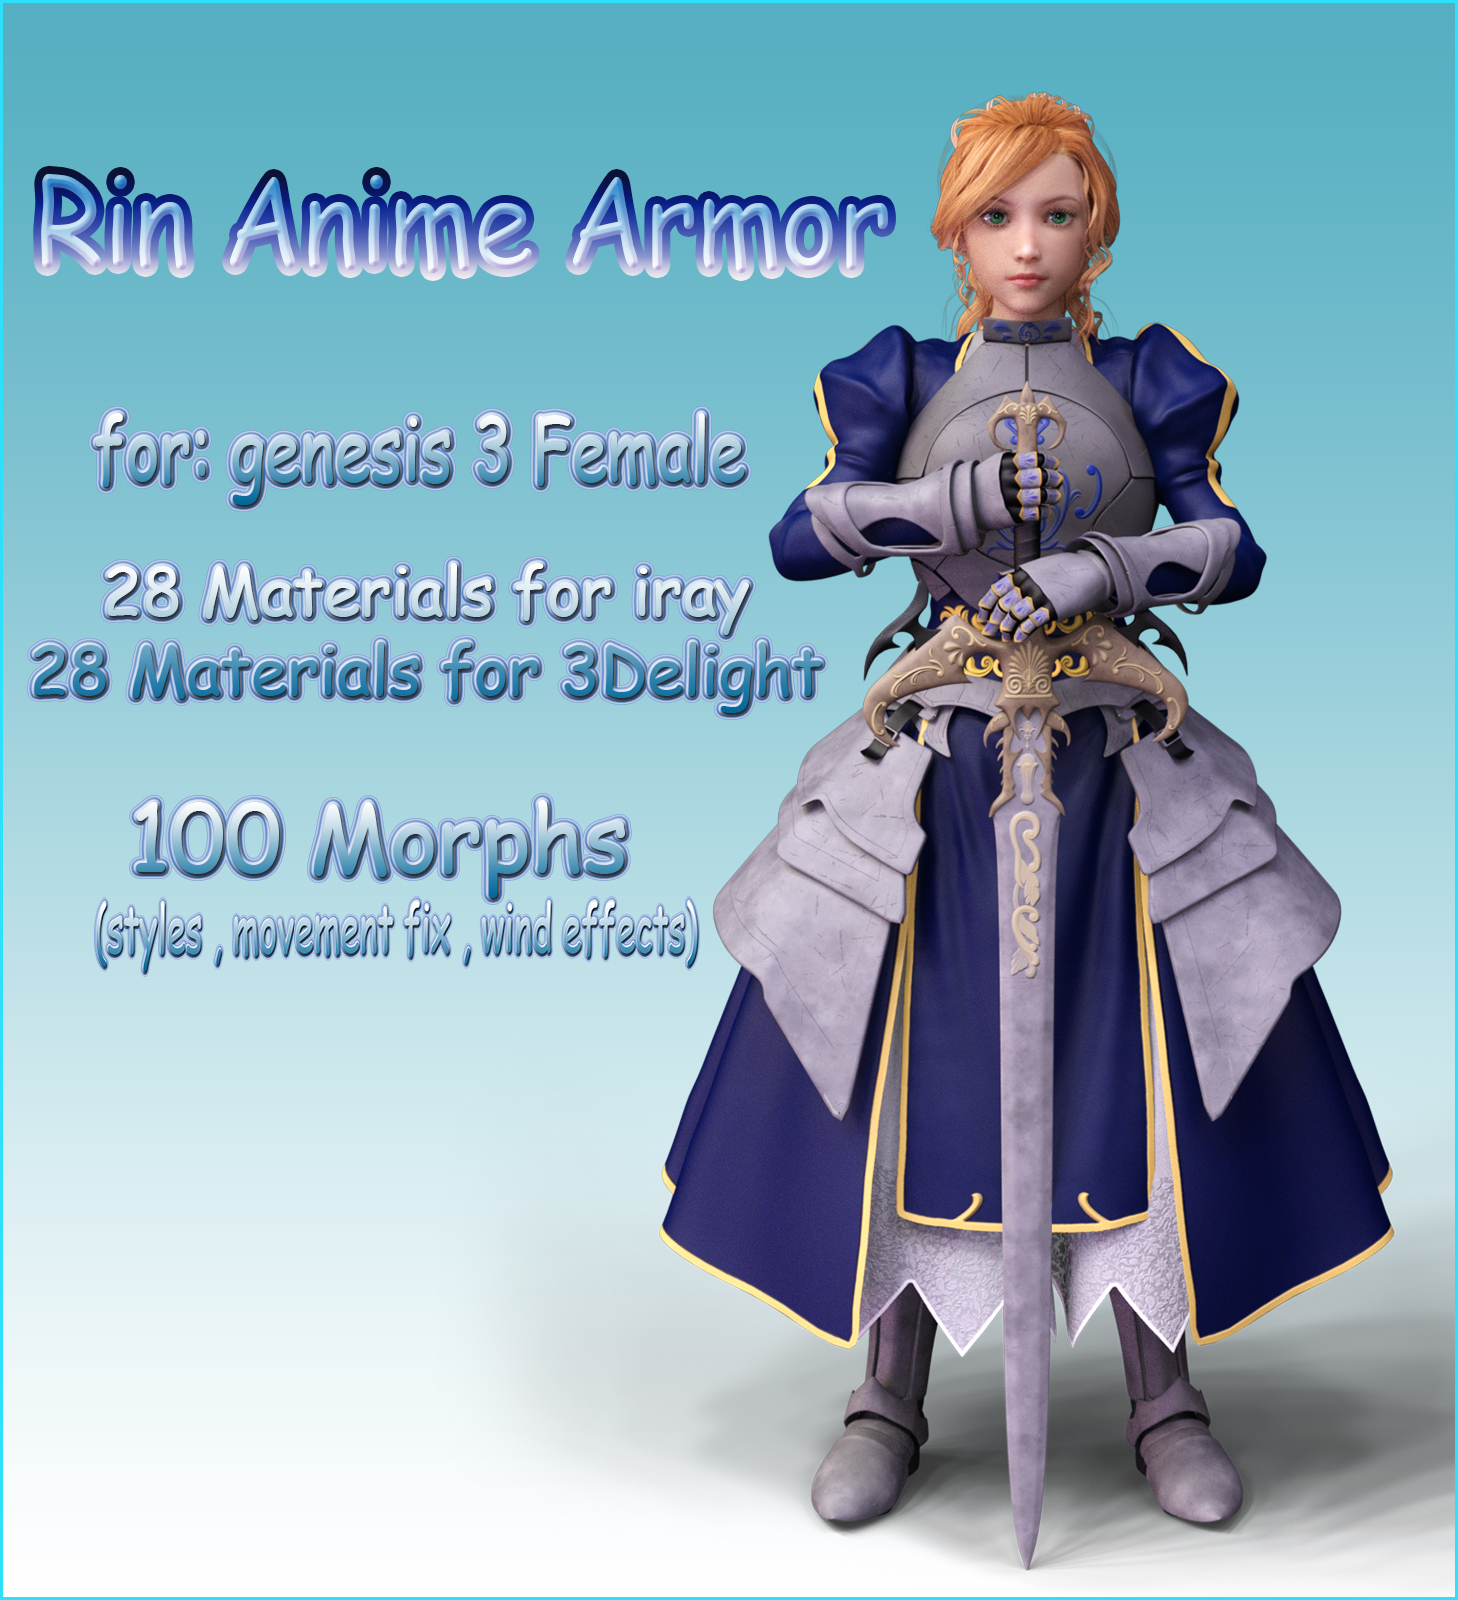 Rin Anime Armor for G3F